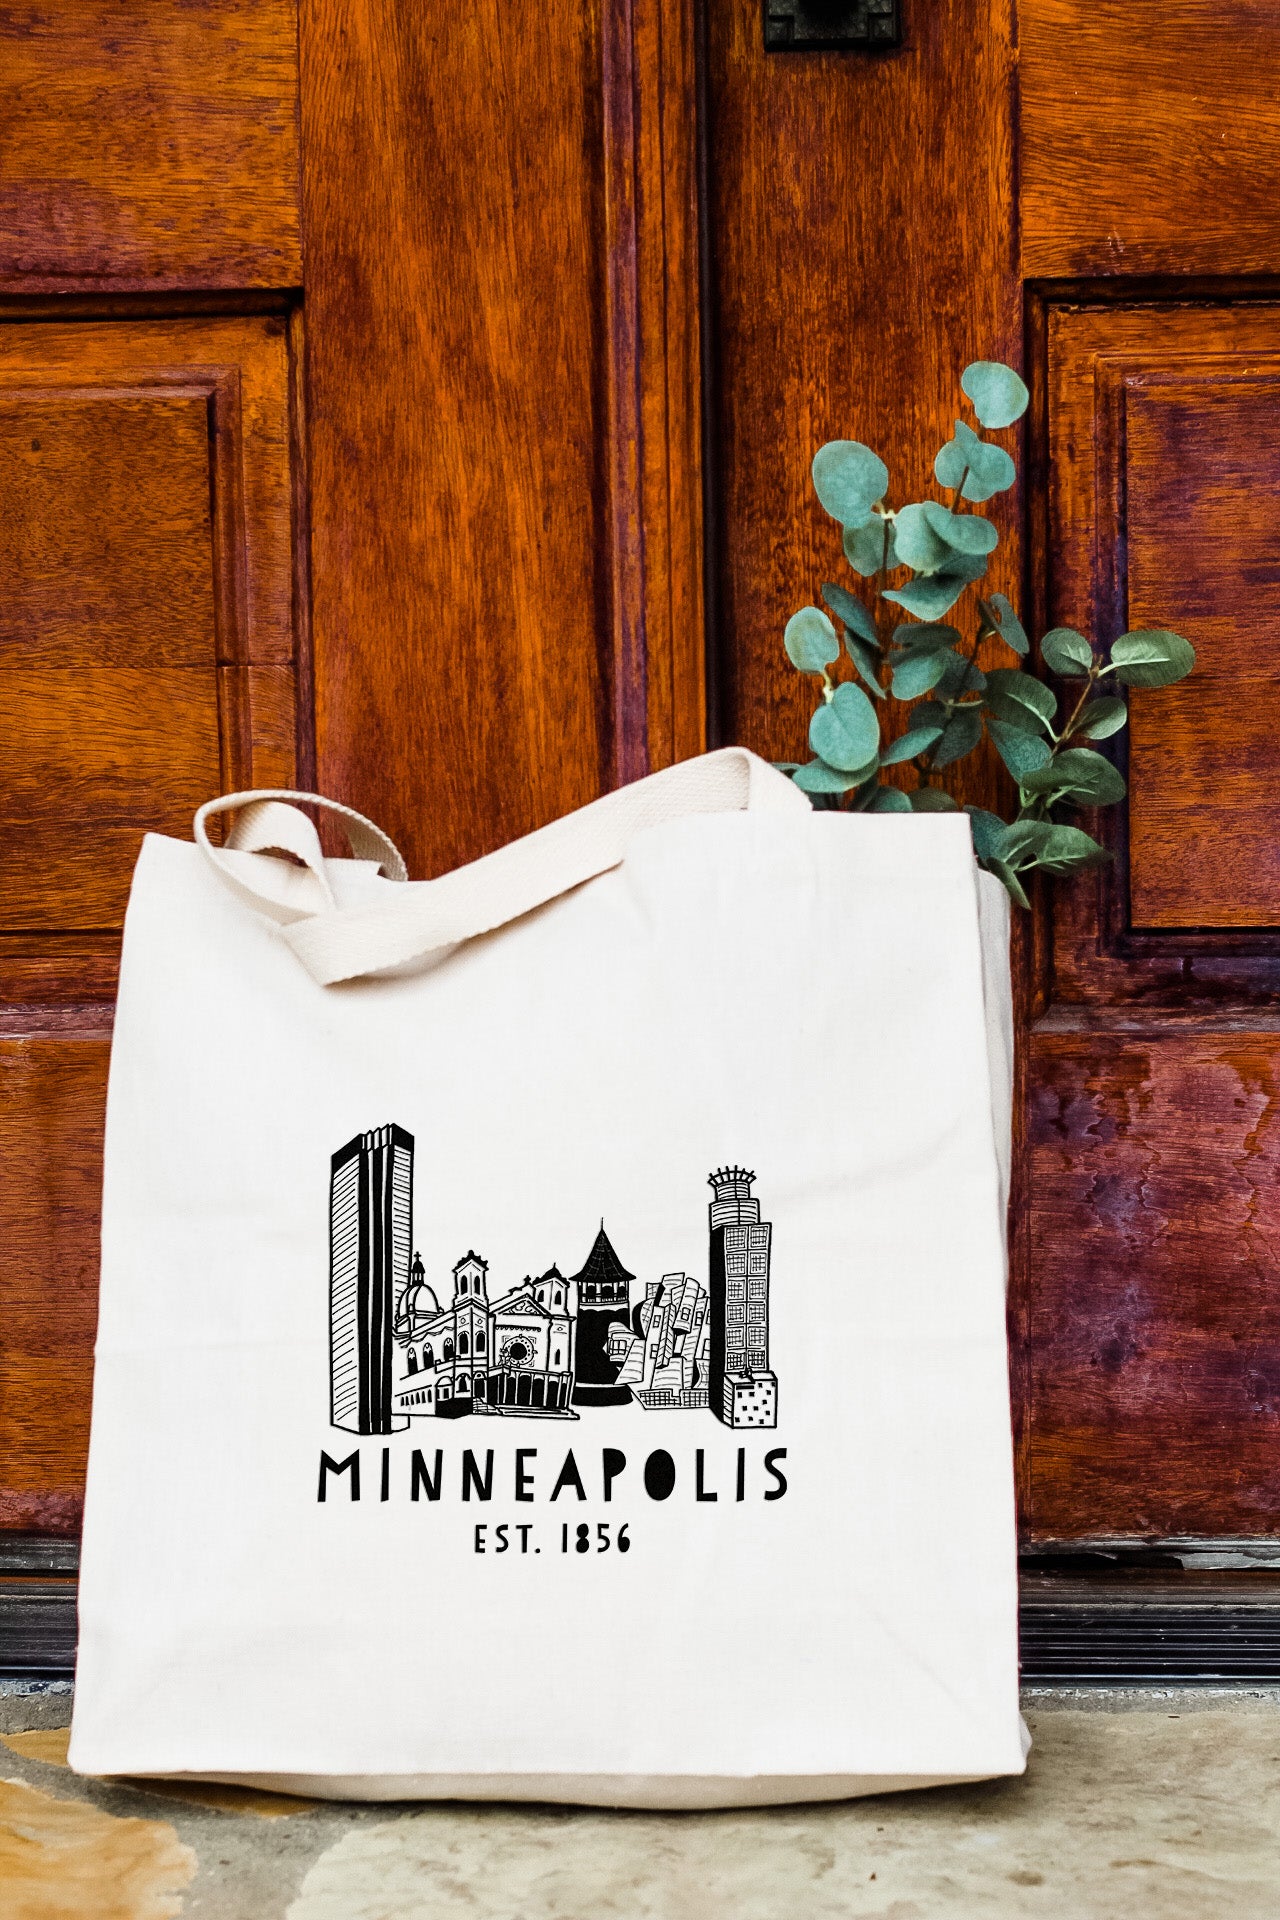 Minneapolis (MN) - Tote Bag - MoonlightMakers